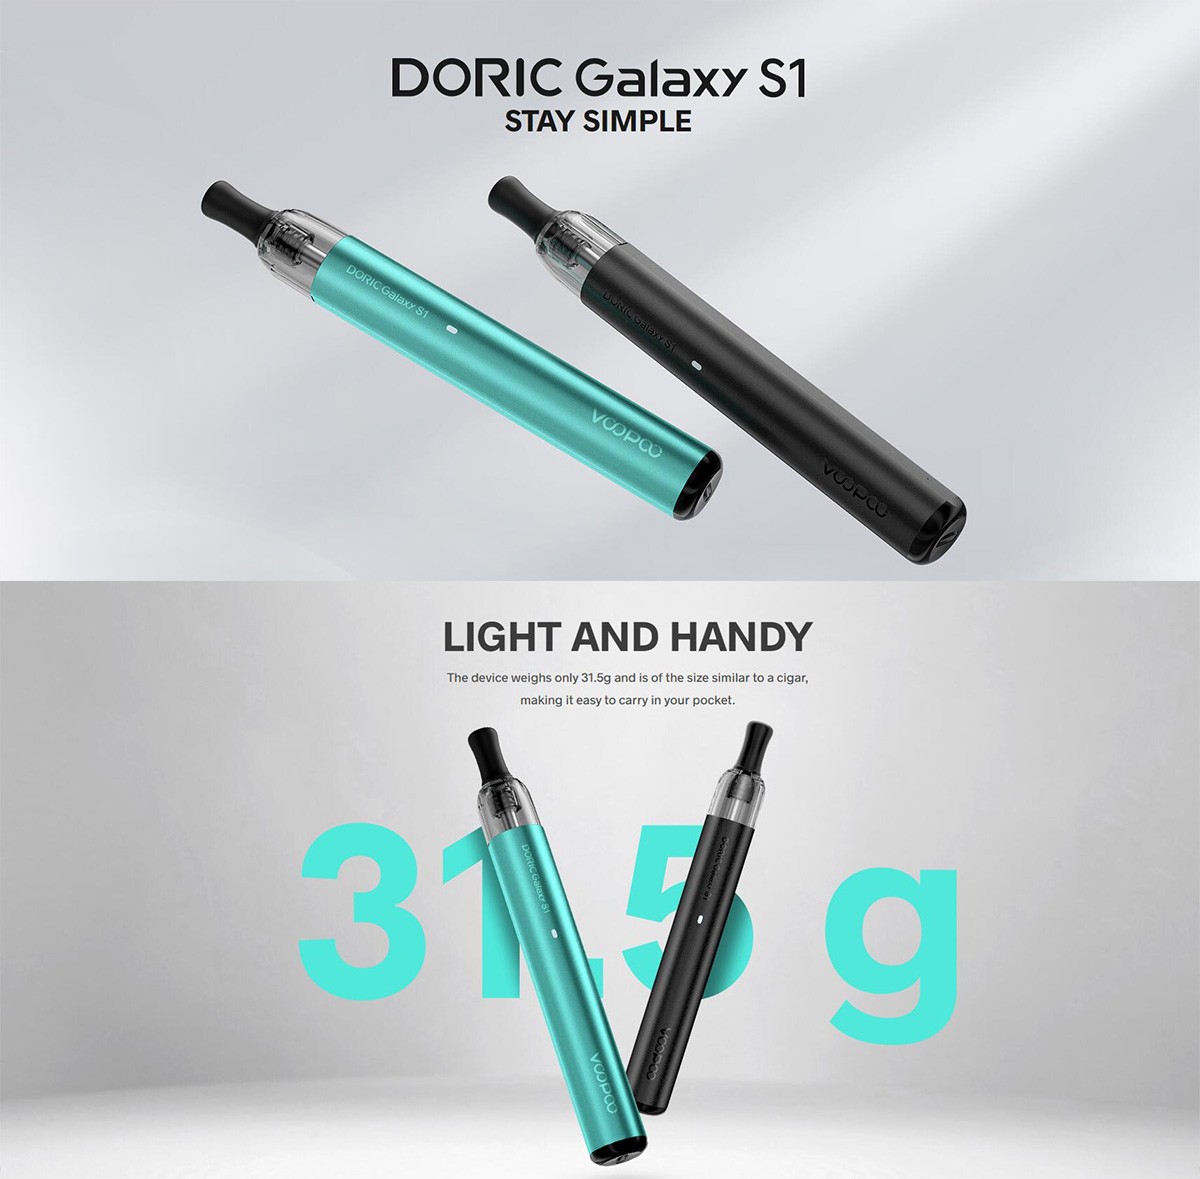 VOOPOO Doric Galaxy S1 Kit